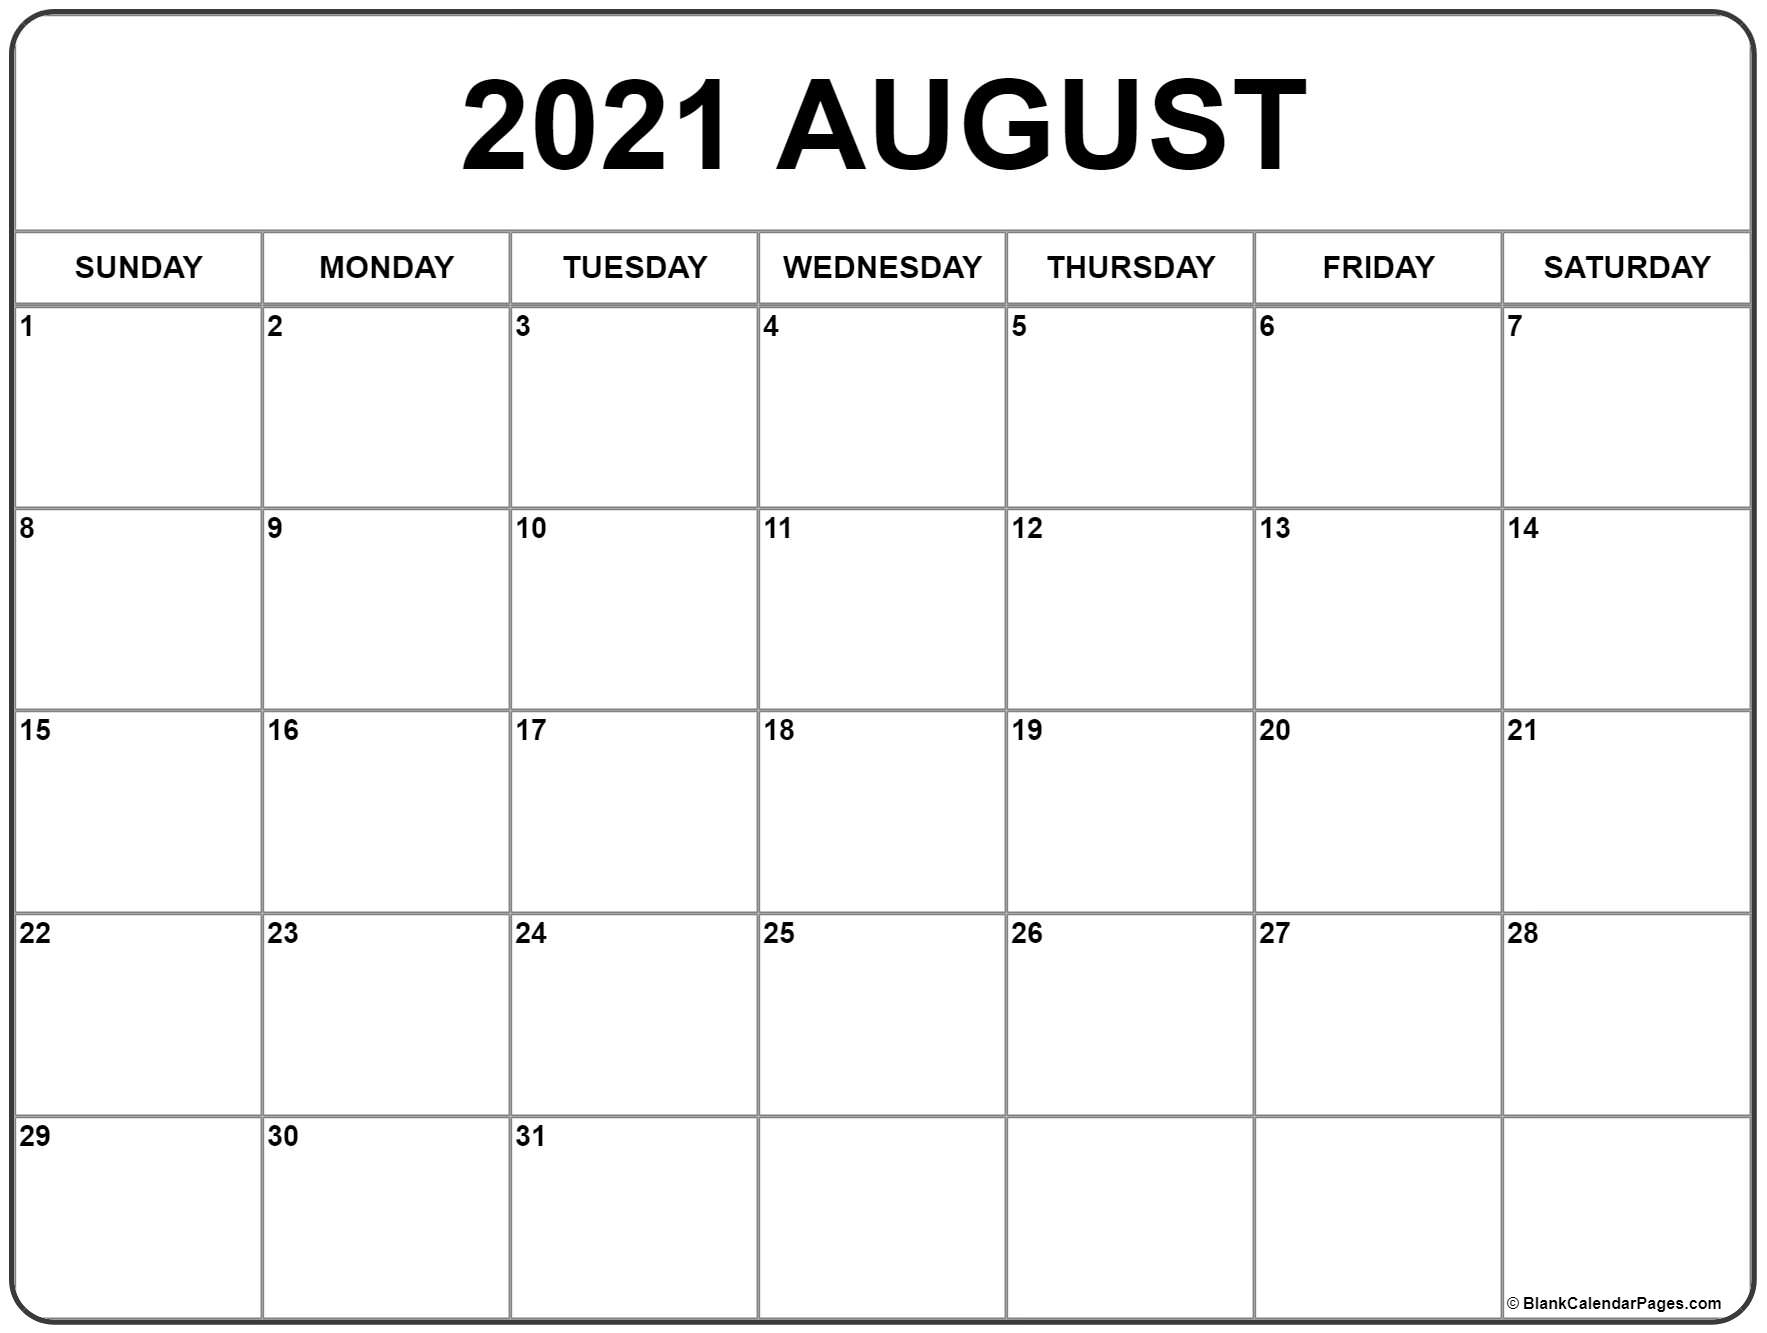 August 2021 Calendar | Free Printable Calendar Free Calendar Template August 2021